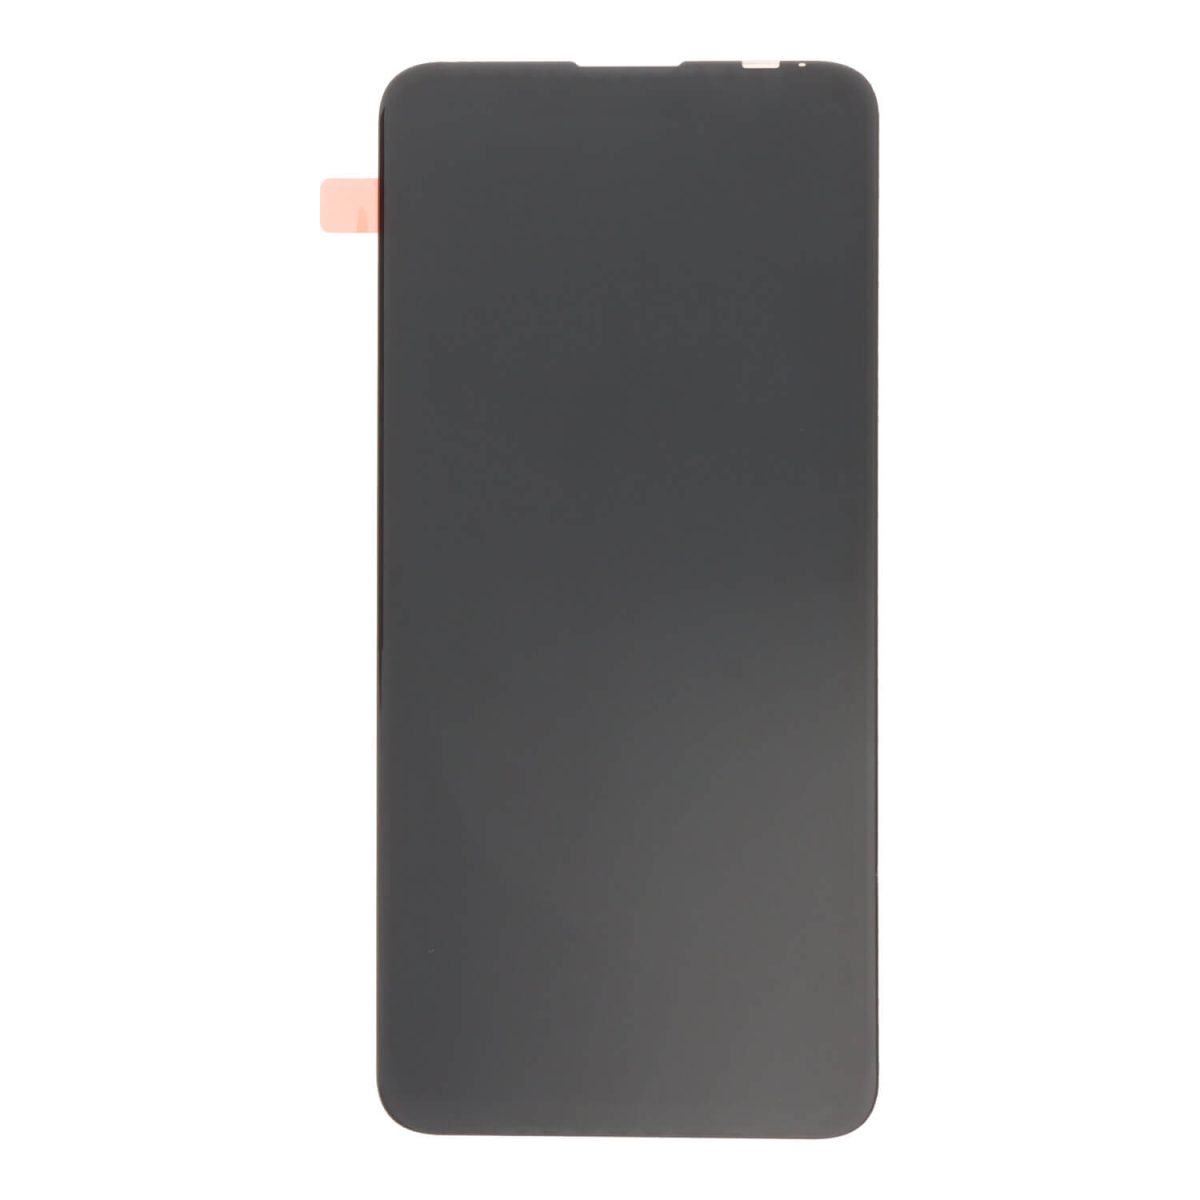 Screen Replacement for Asus Zenfone 6 - Black